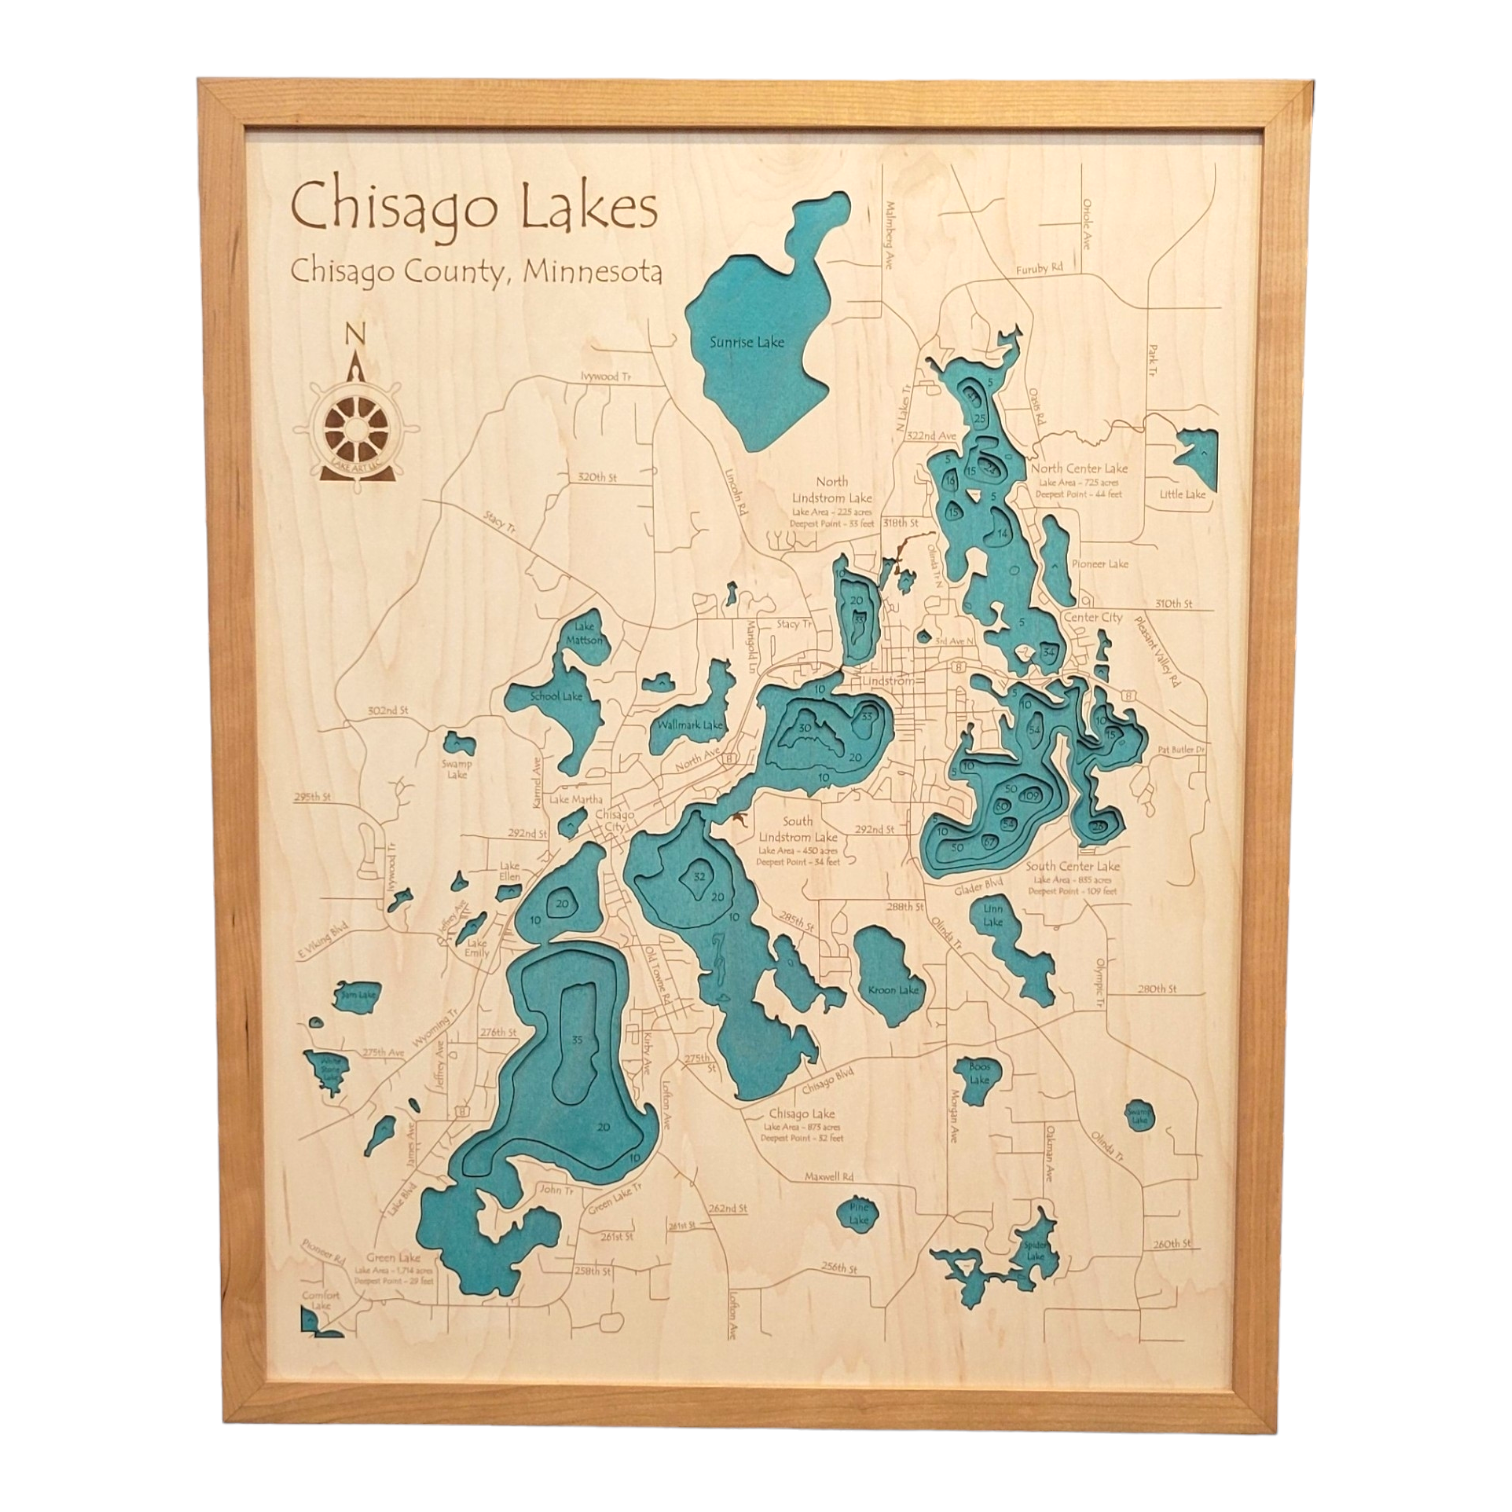 Photo Album: Chisago Lakes Area - Lake Map